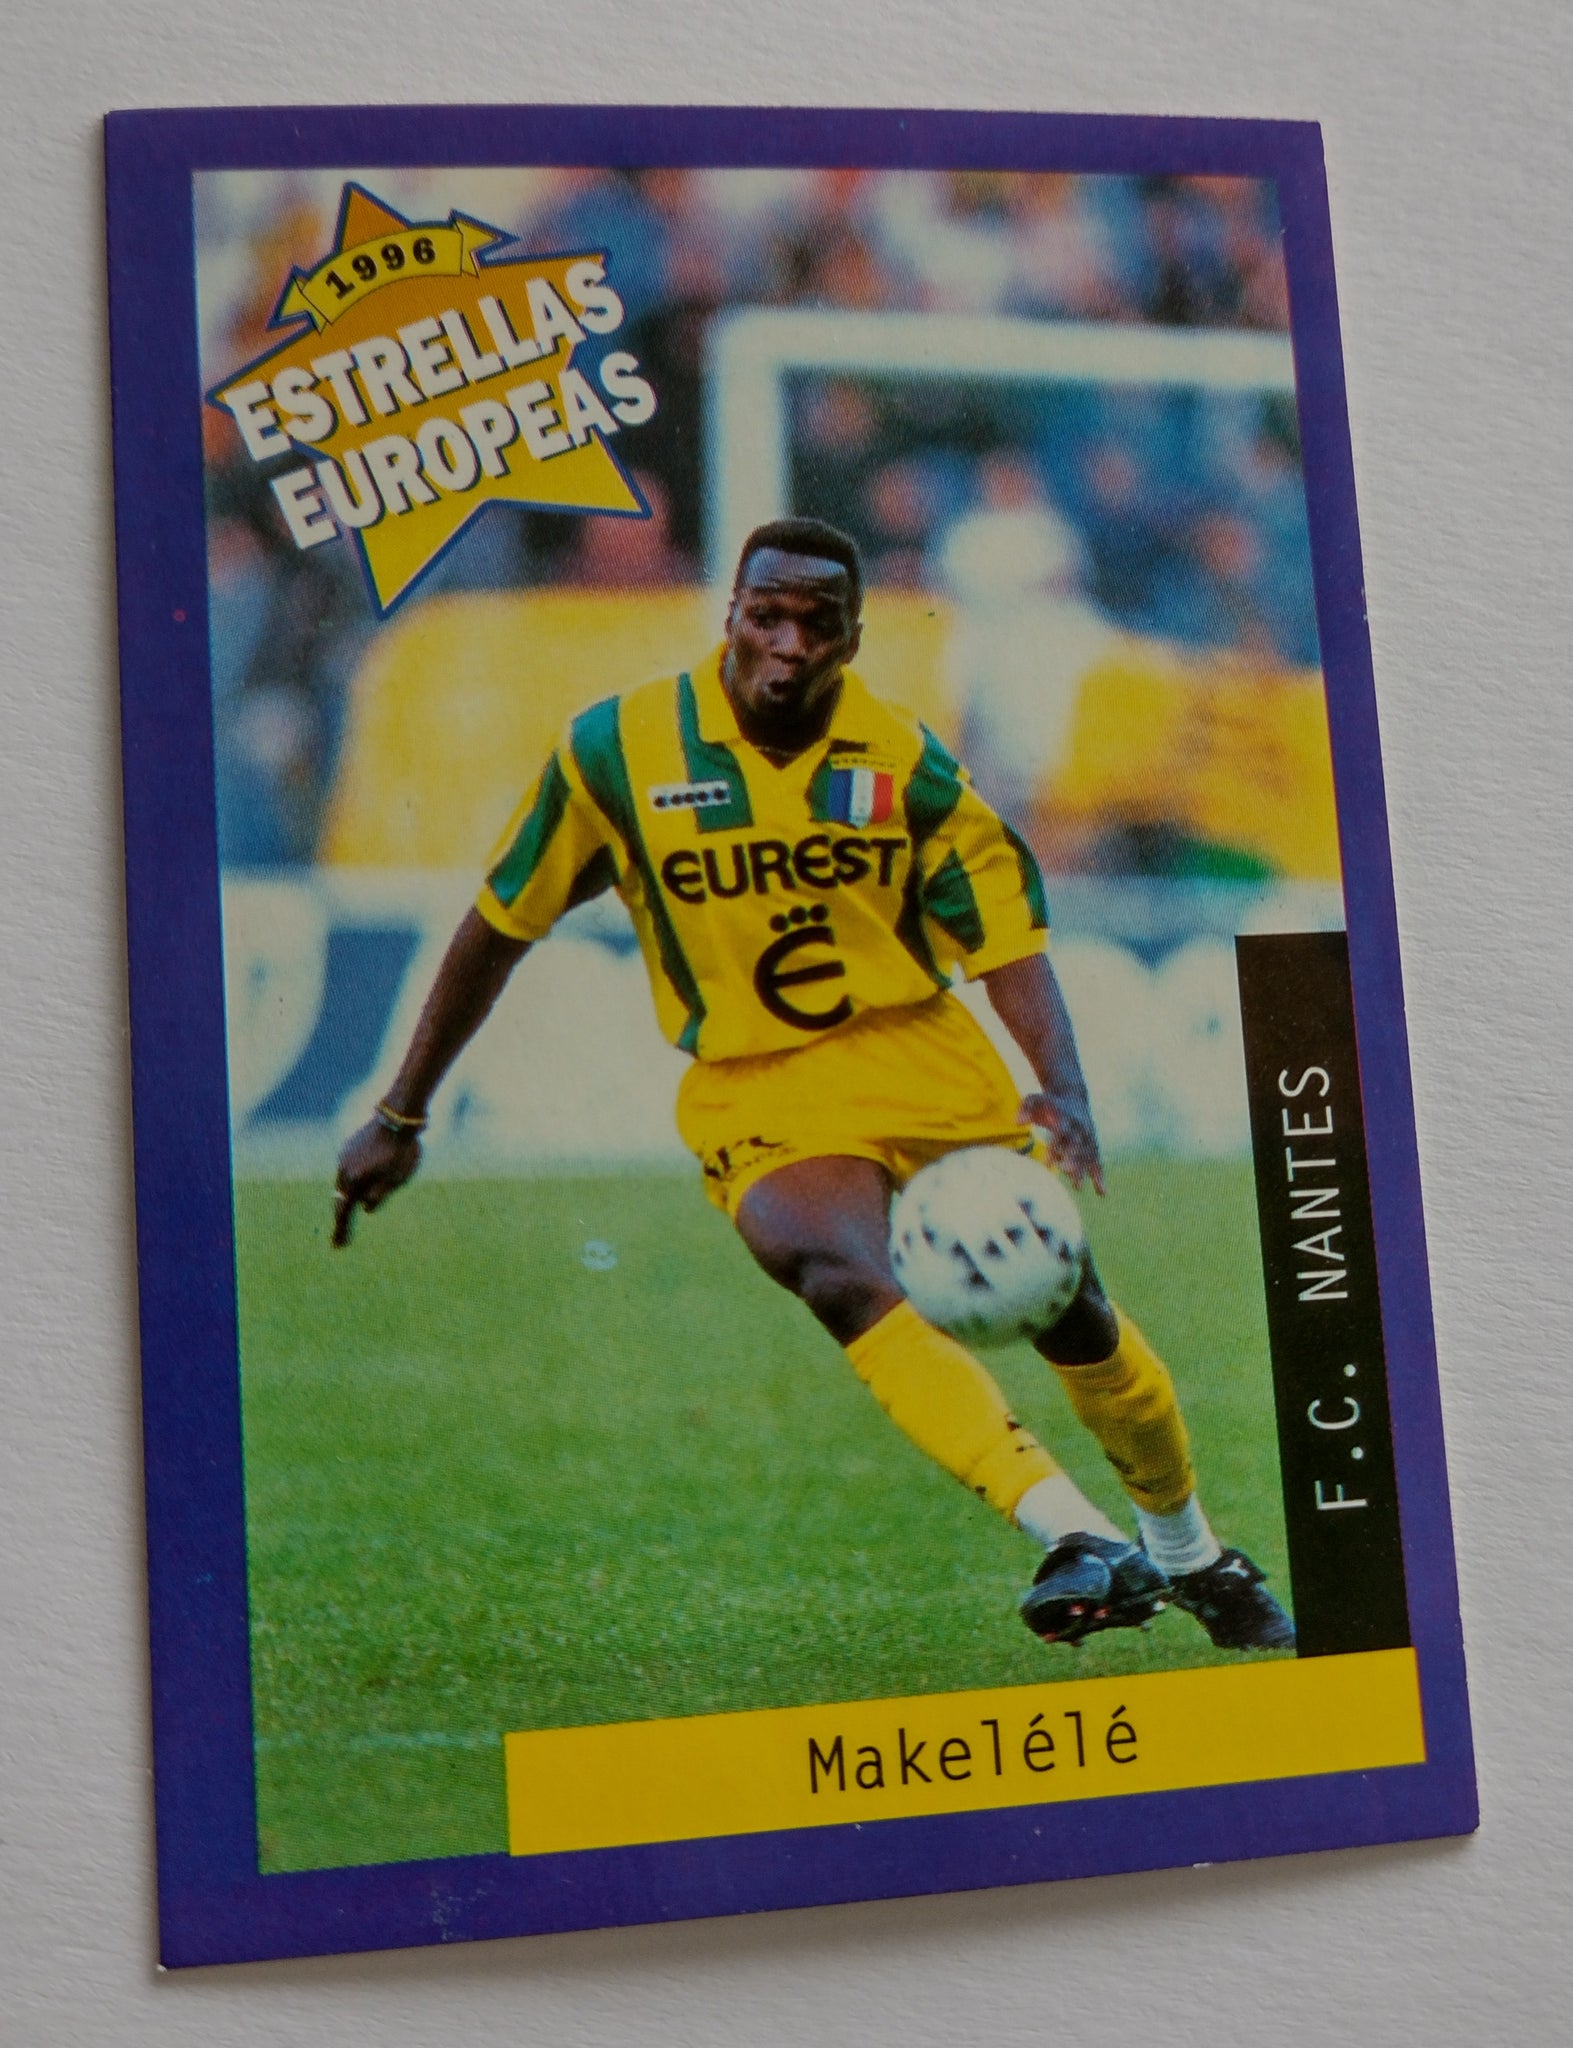 1996 Panini Estrellas Europeas Claude Makelele #30 Trading Card